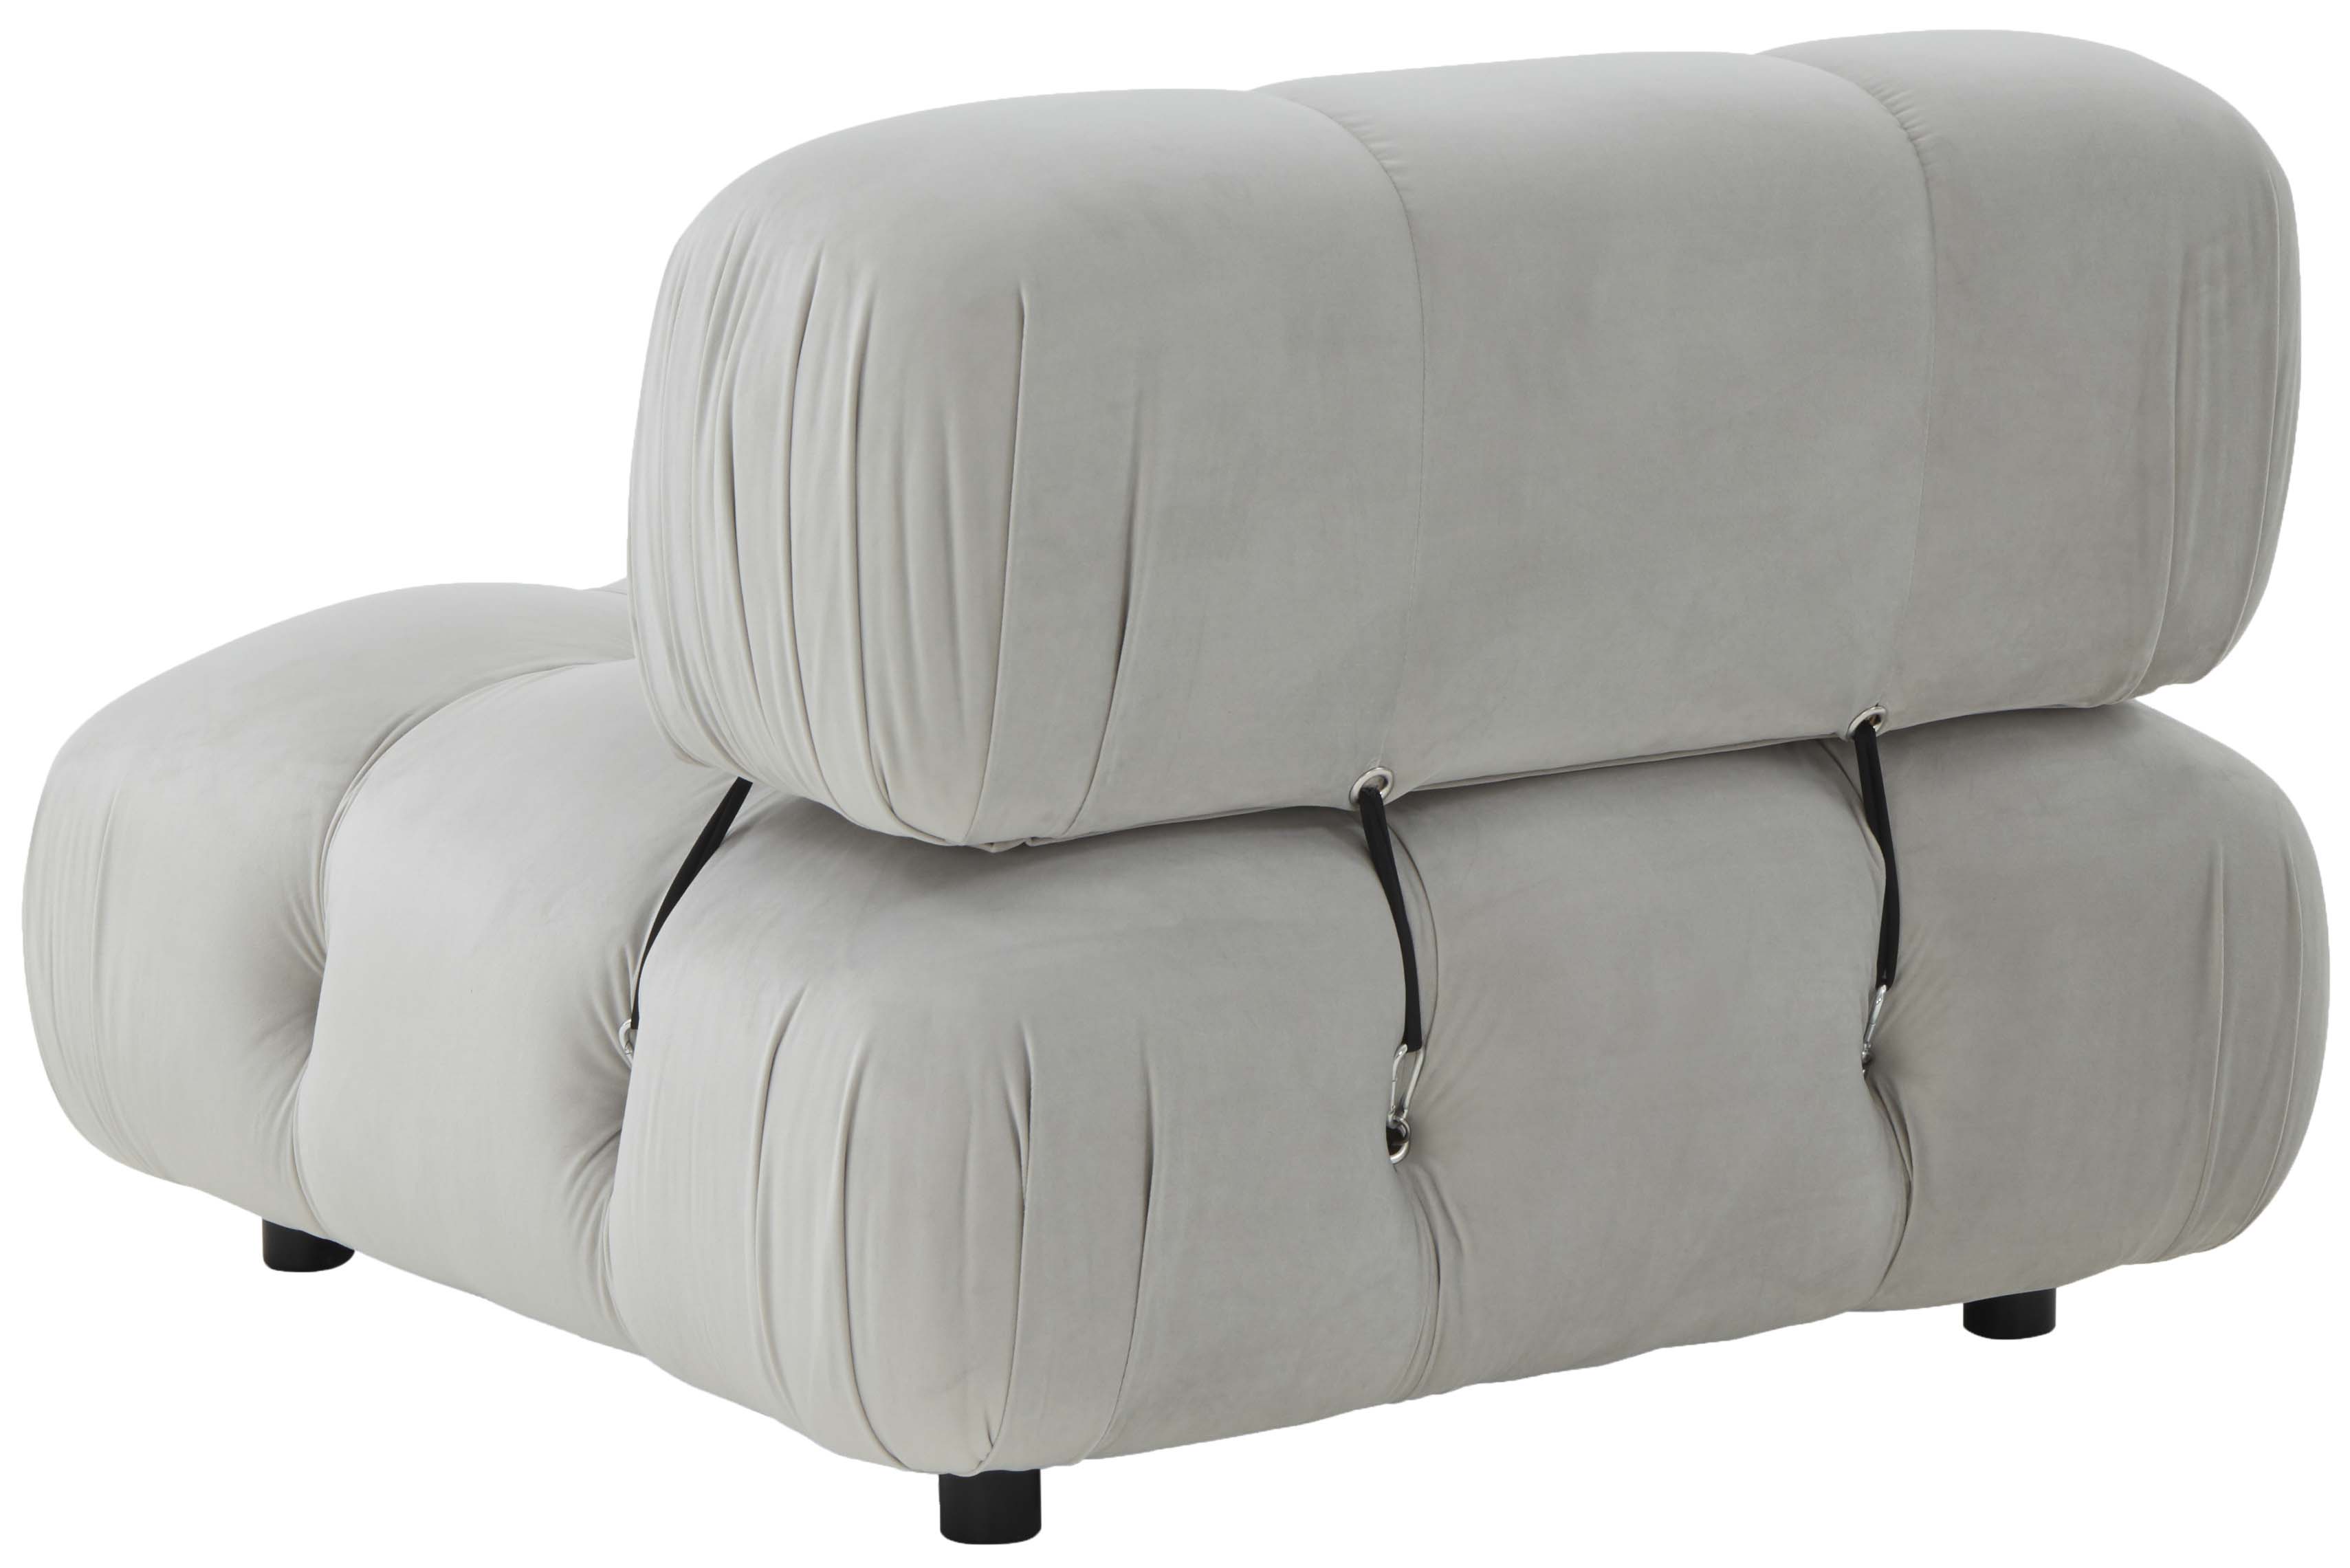 Safavieh Couture Ellamaria Tufted Accent Chair - Light Grey